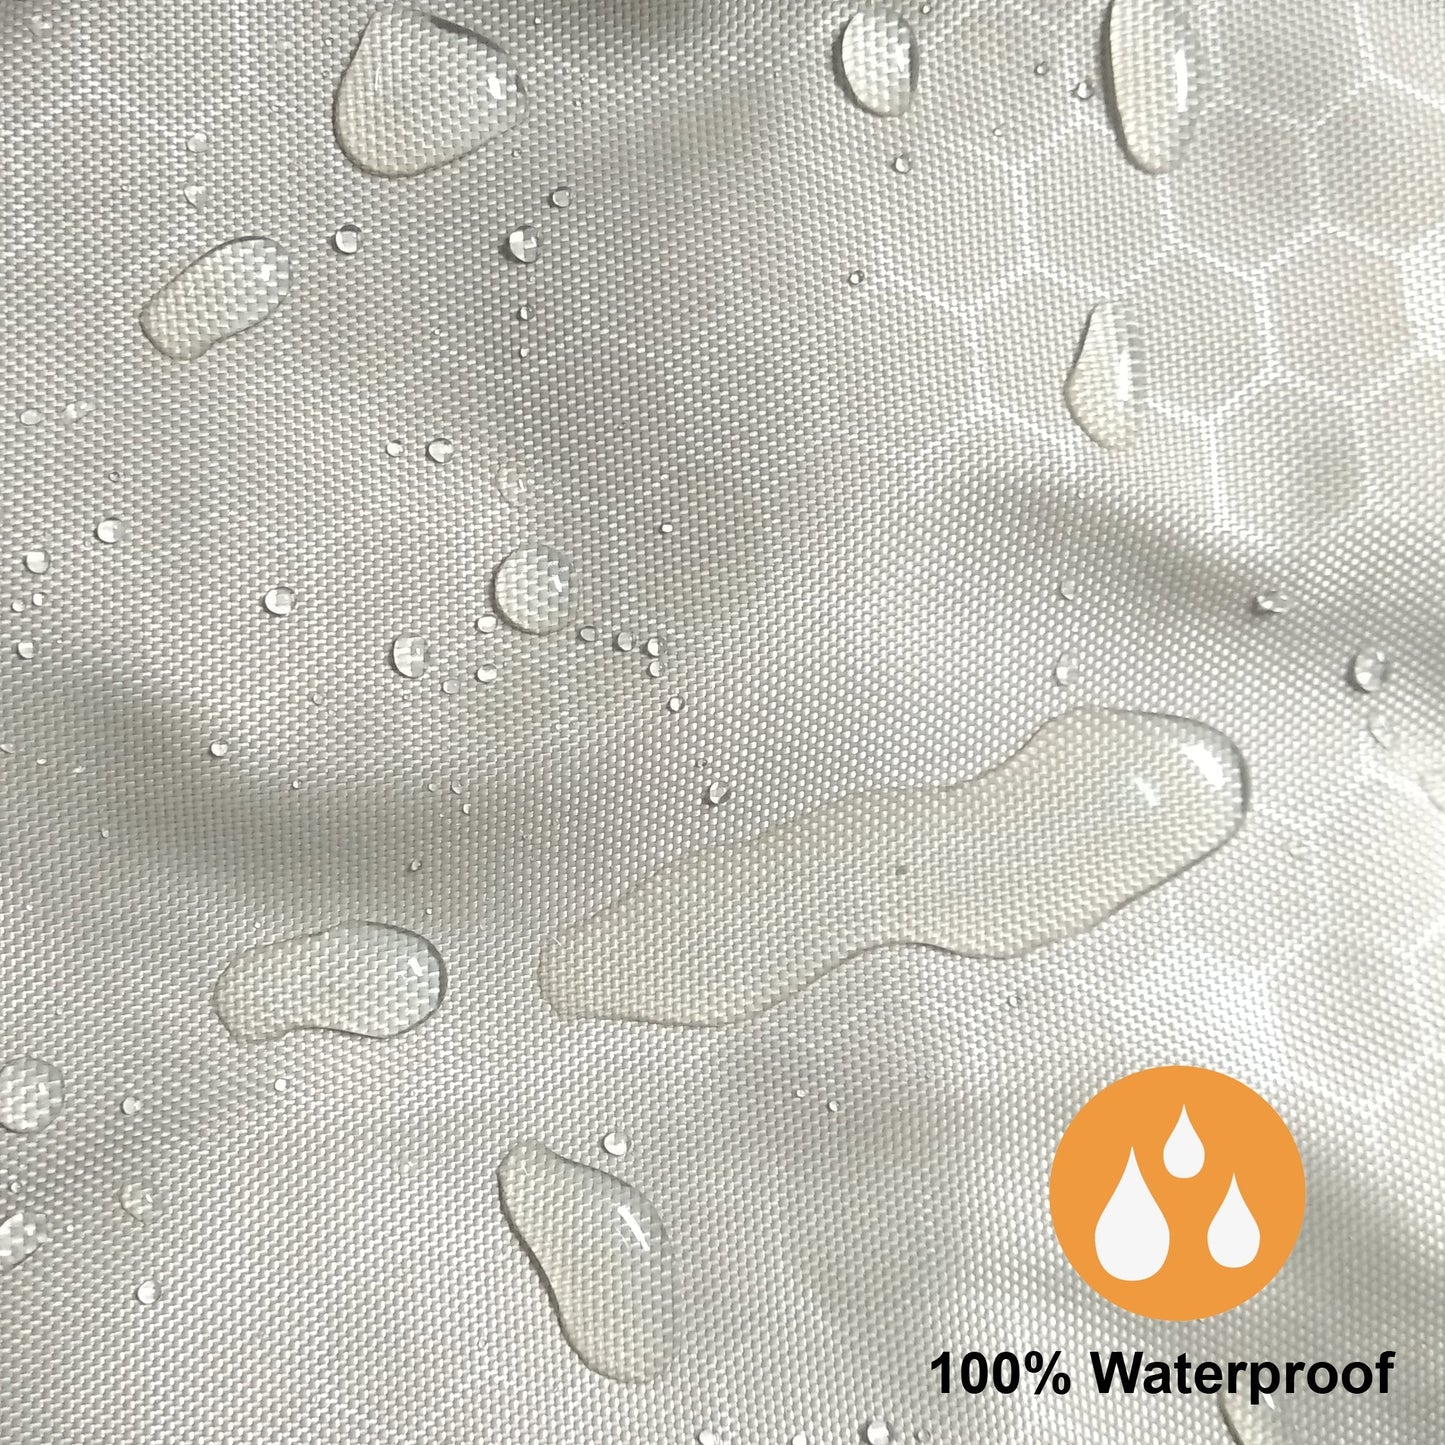 Oshotto Brown 100% Waterproof Car Body Cover with Mirror Pockets For Maruti Suzuki Ciaz